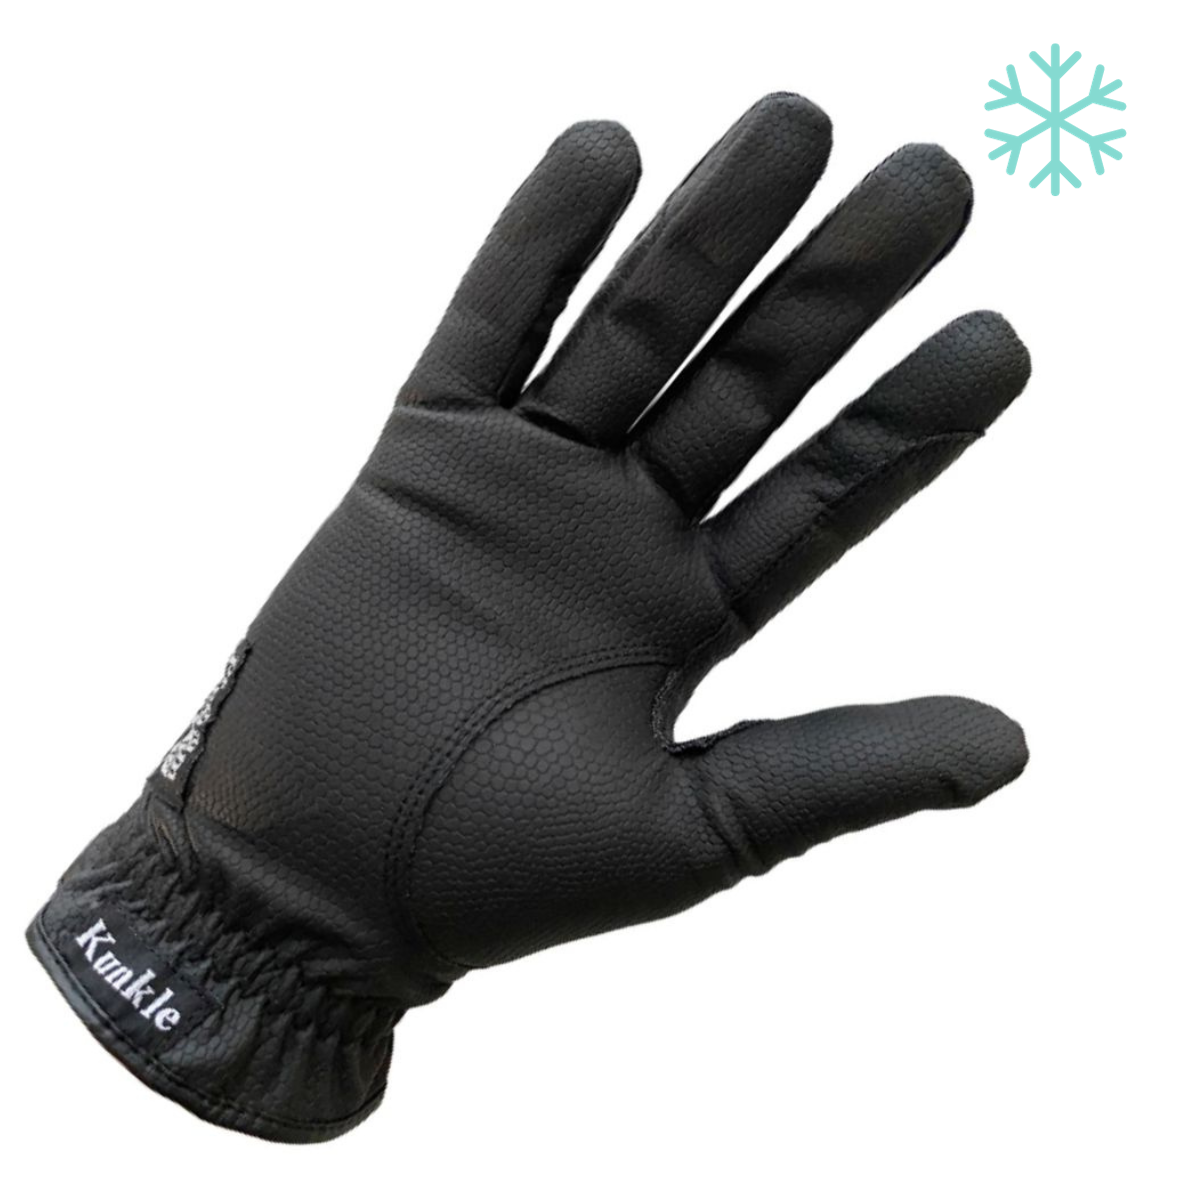 Kunkle Equestrian Premium Winter Glove in Black